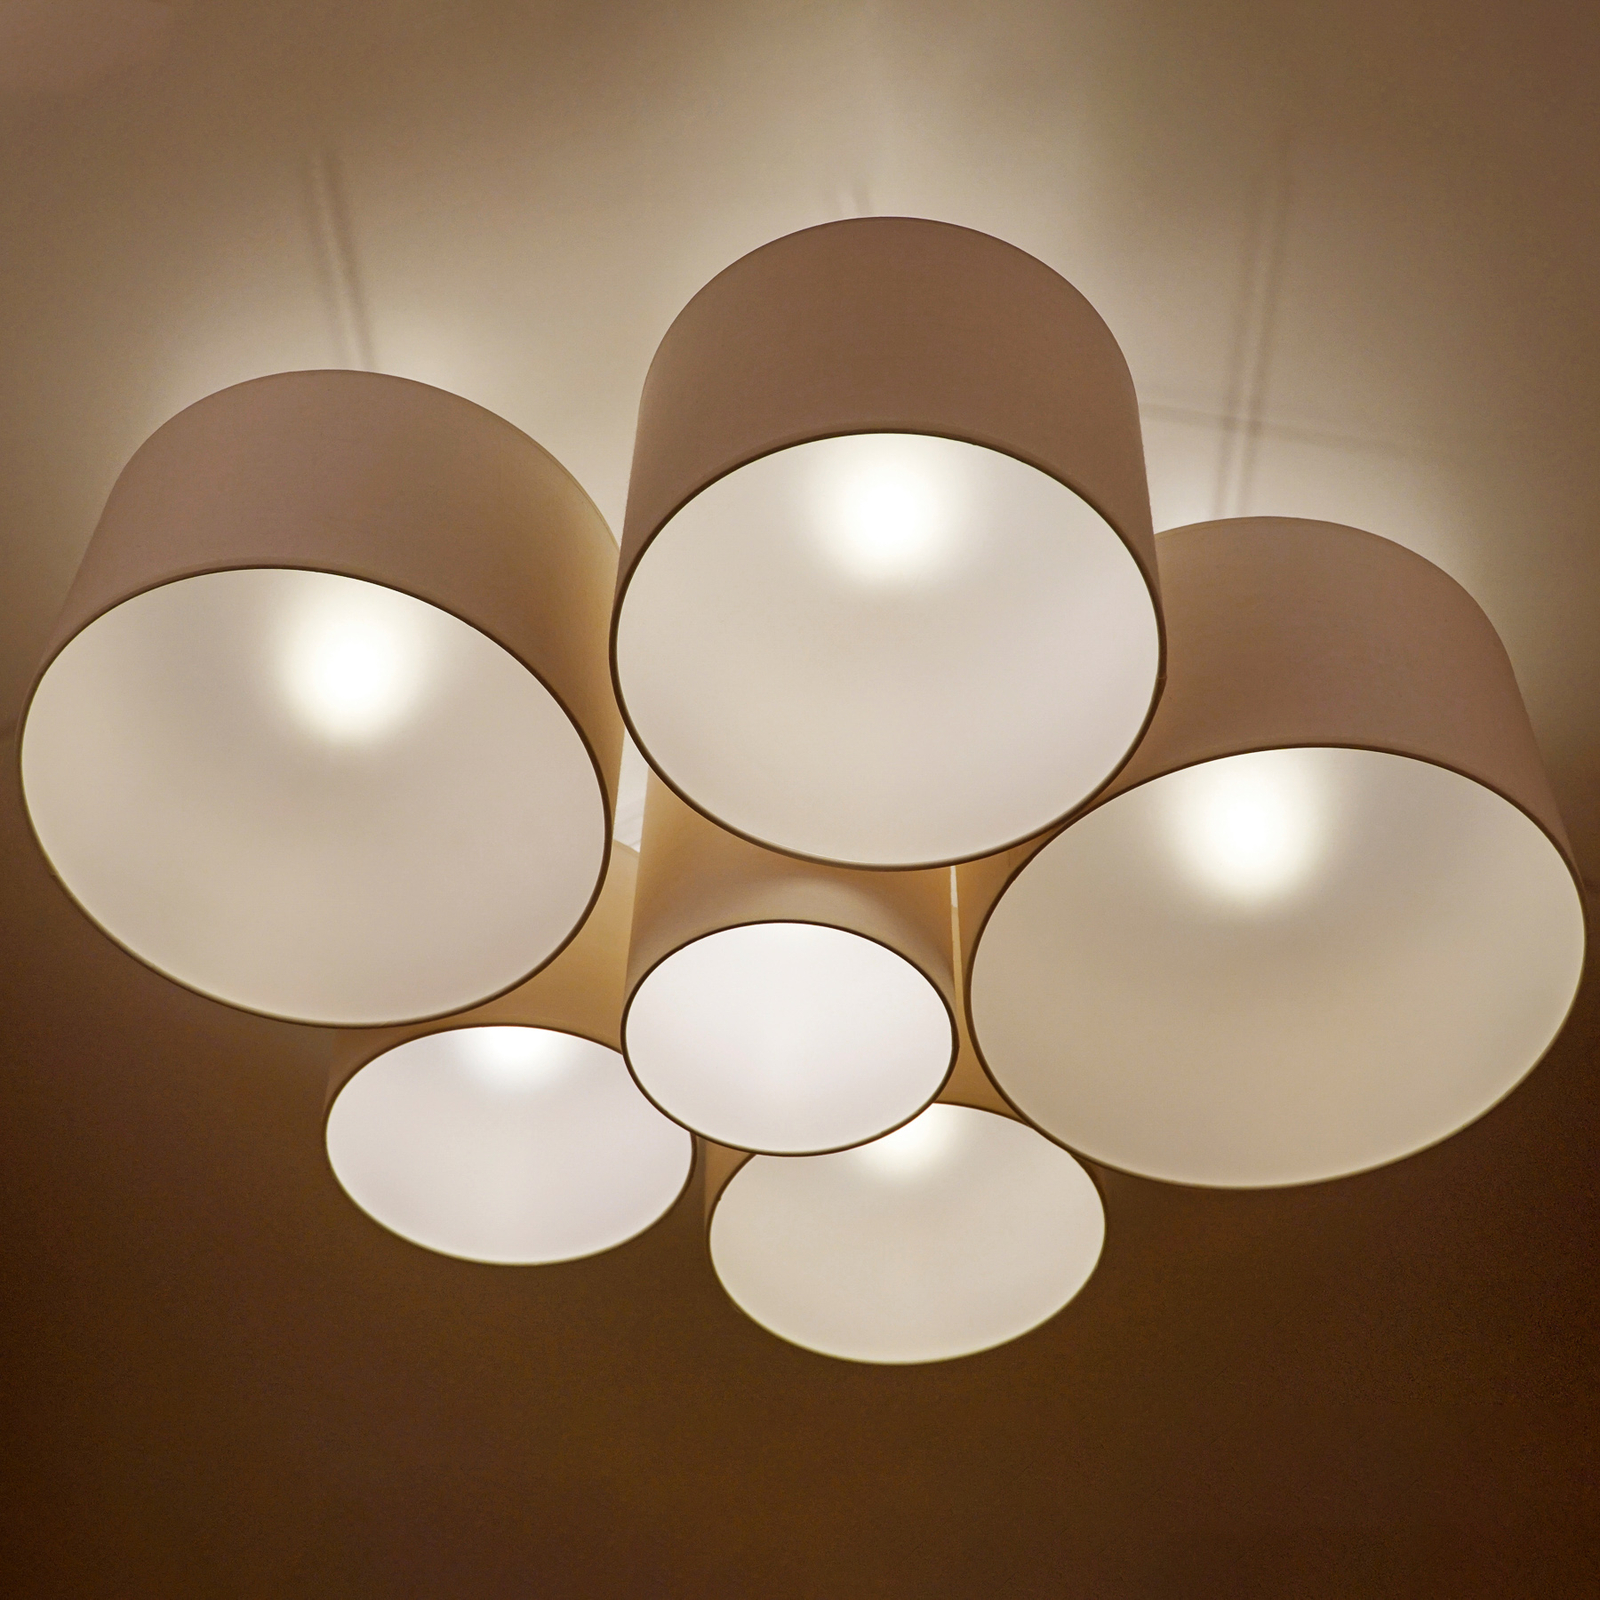 Euluna Lodge ceiling light, 6-bulb, beige